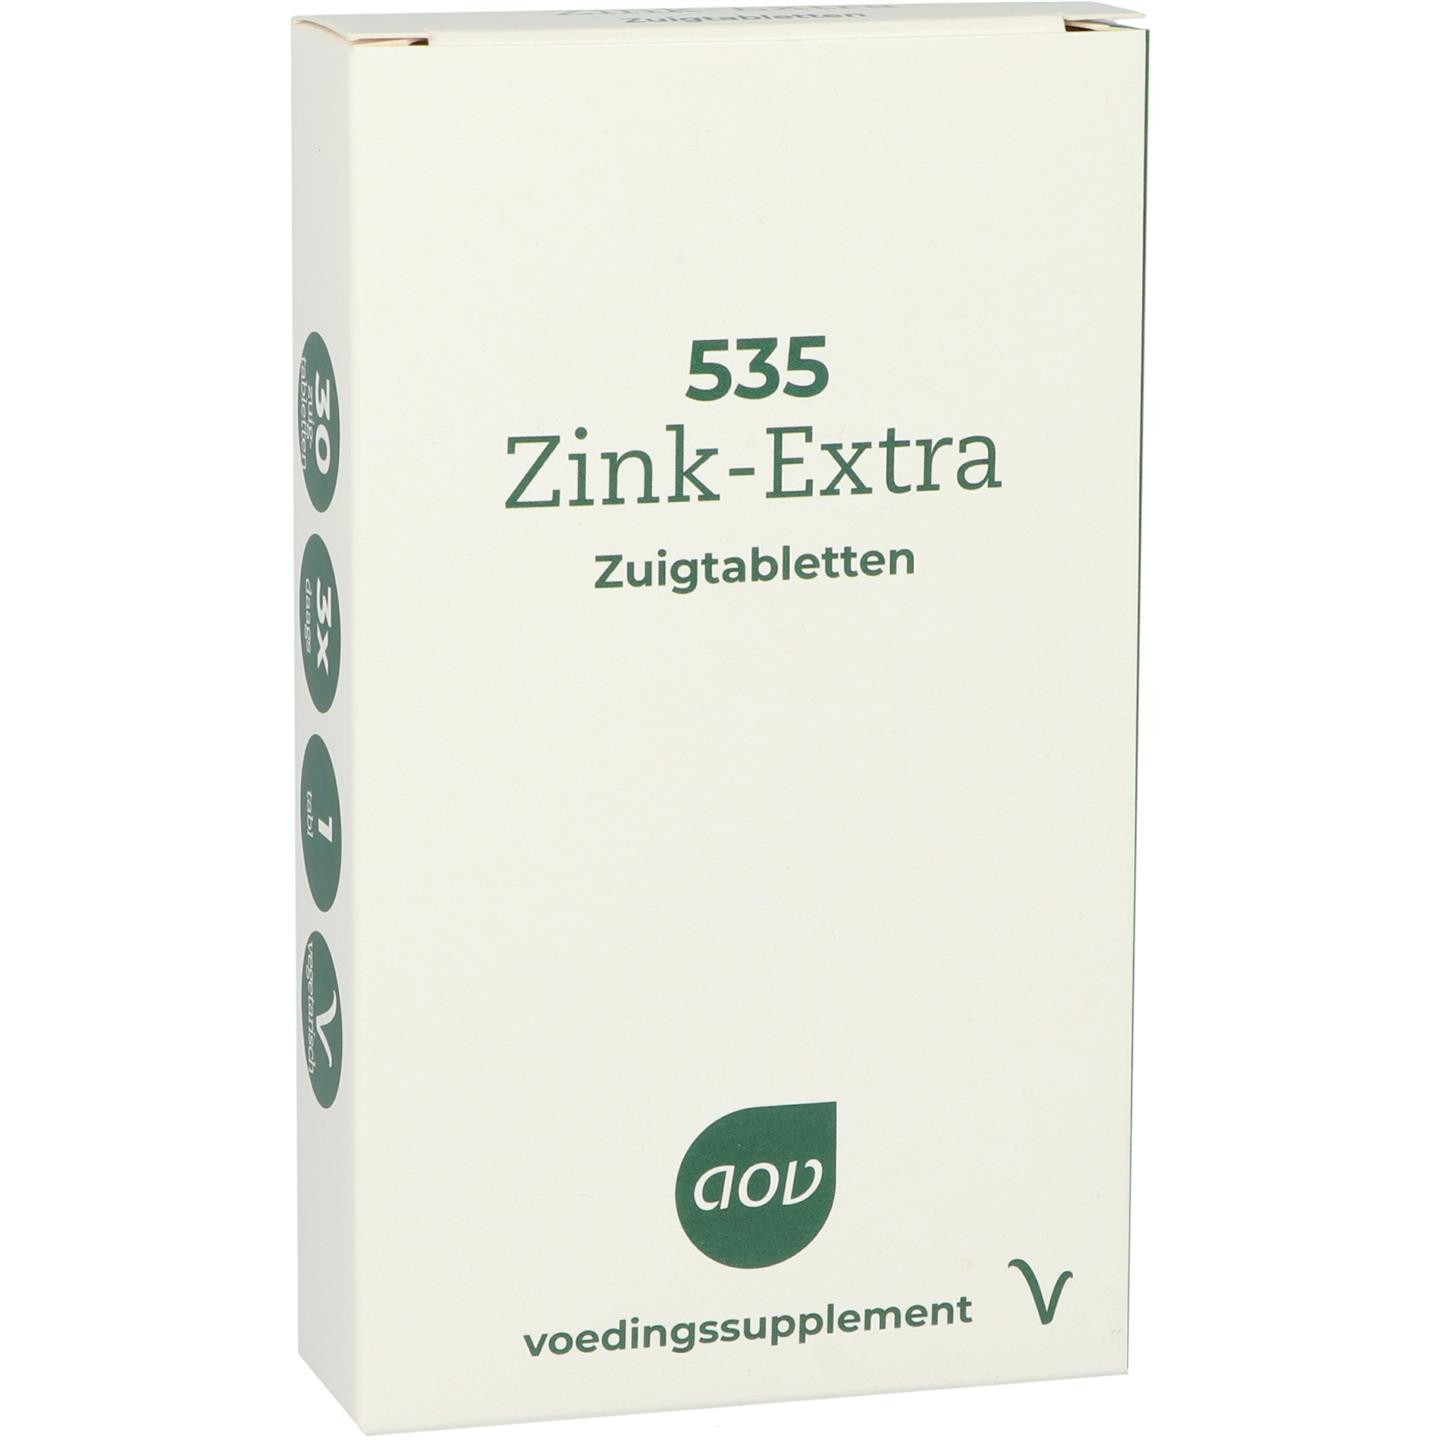 535 Zink Extra